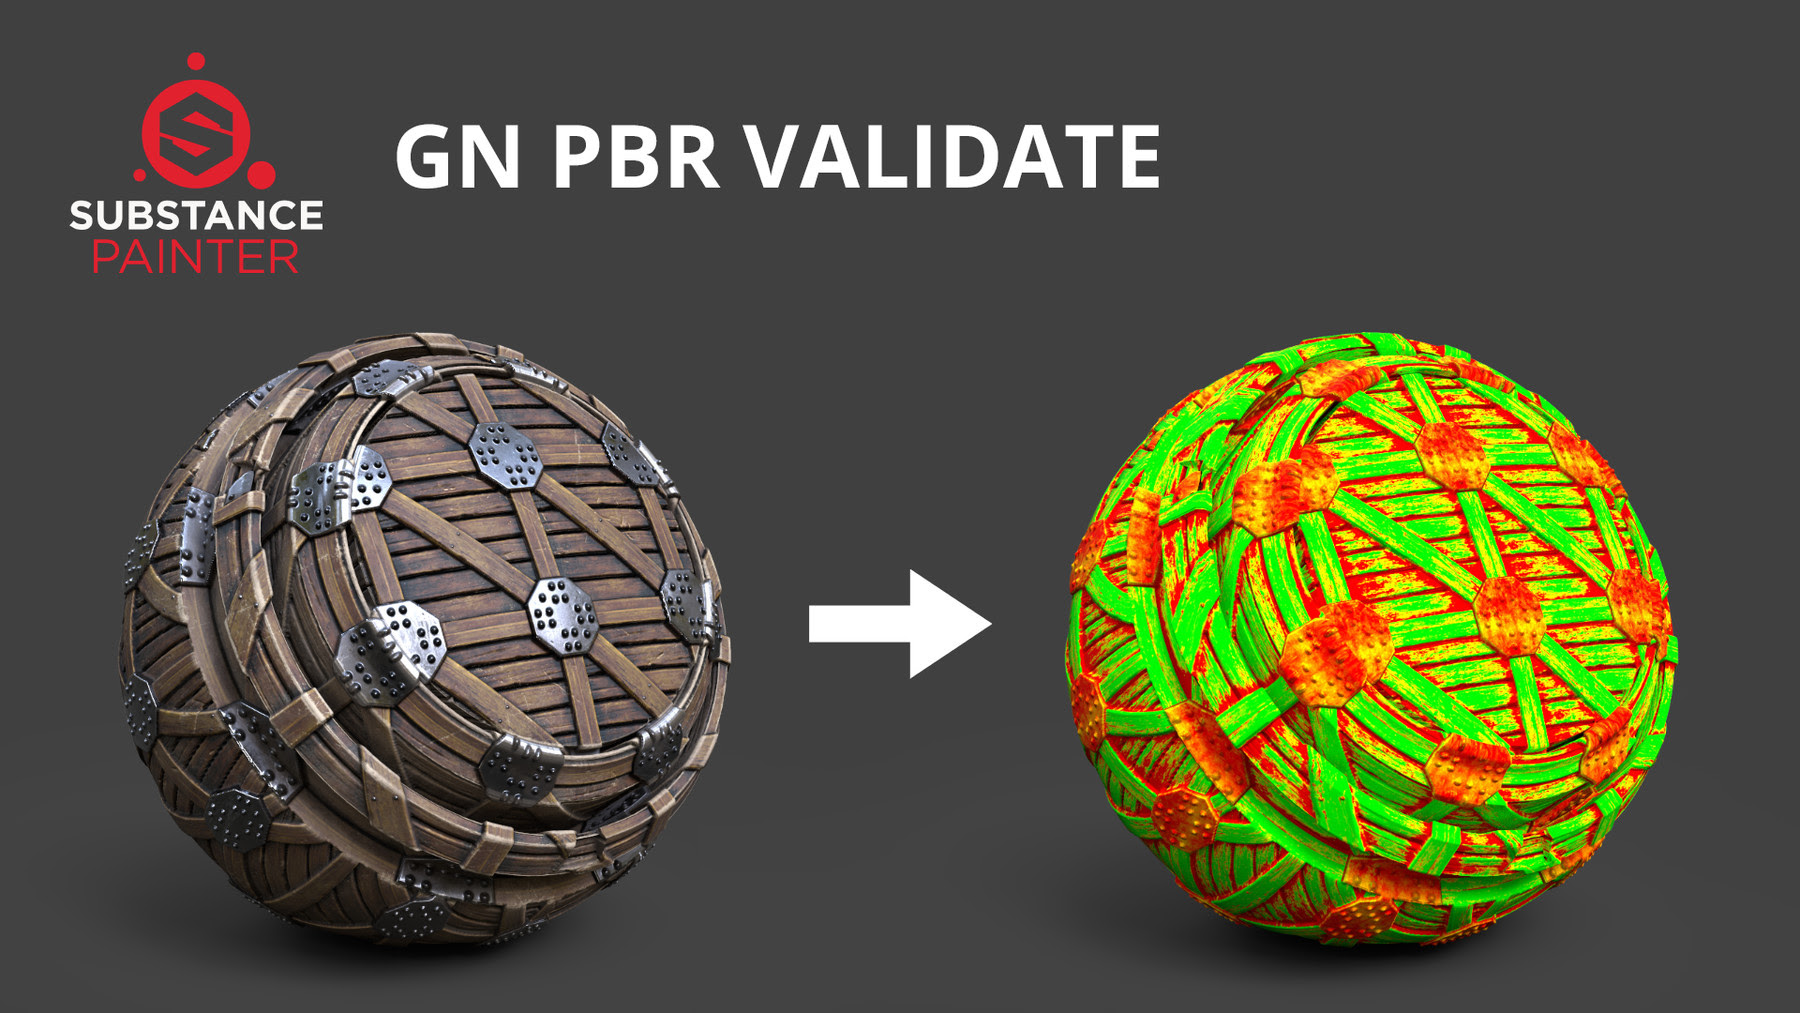 ArtStation [Substance Painter] GN PBR Validate Resources